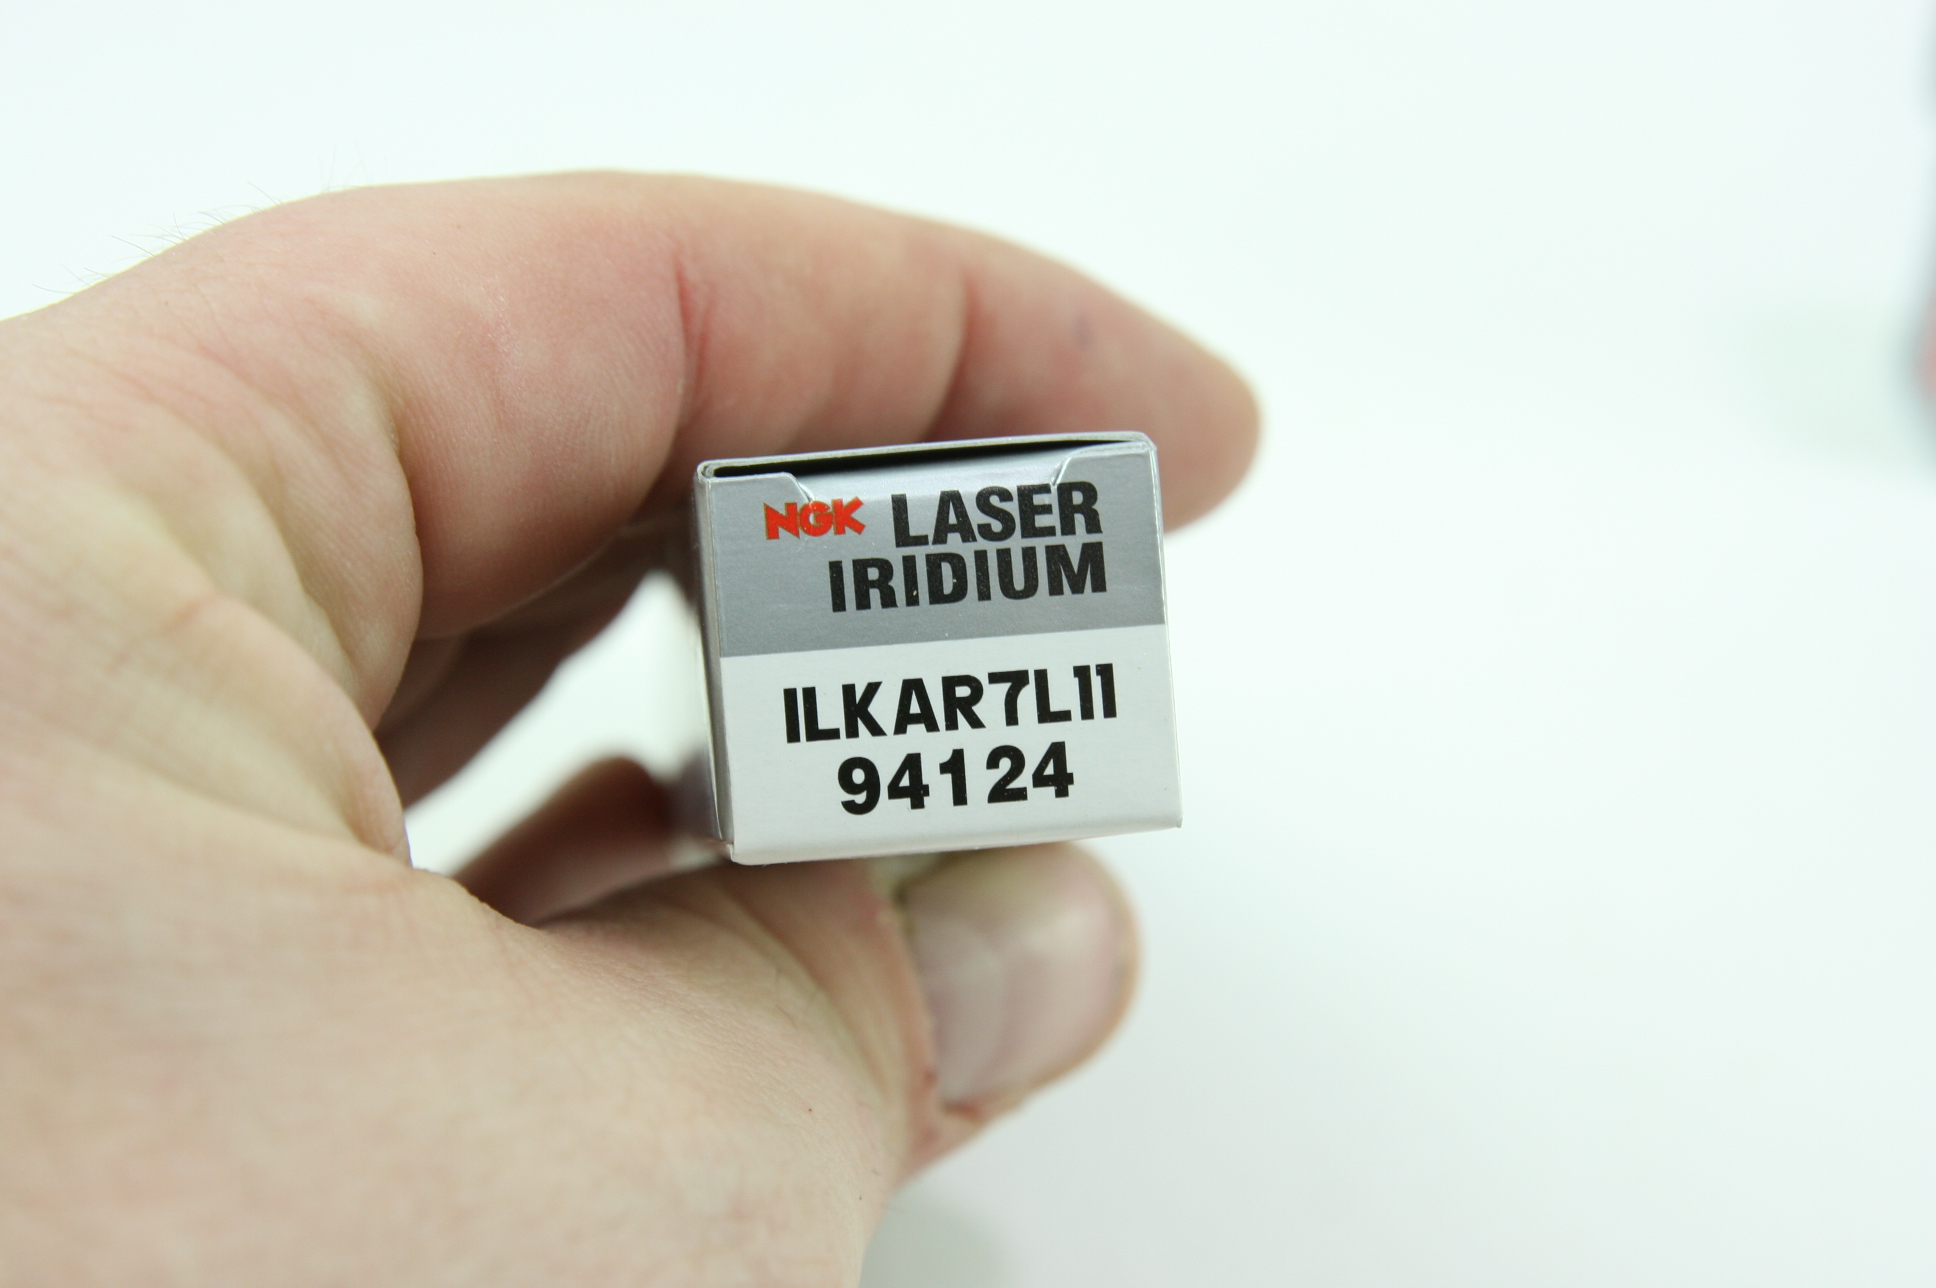 Set of 6 New NGK 94124 Laser Iridium Spark Plugs ILKAR7L11 Fast Free Shipping - image 2